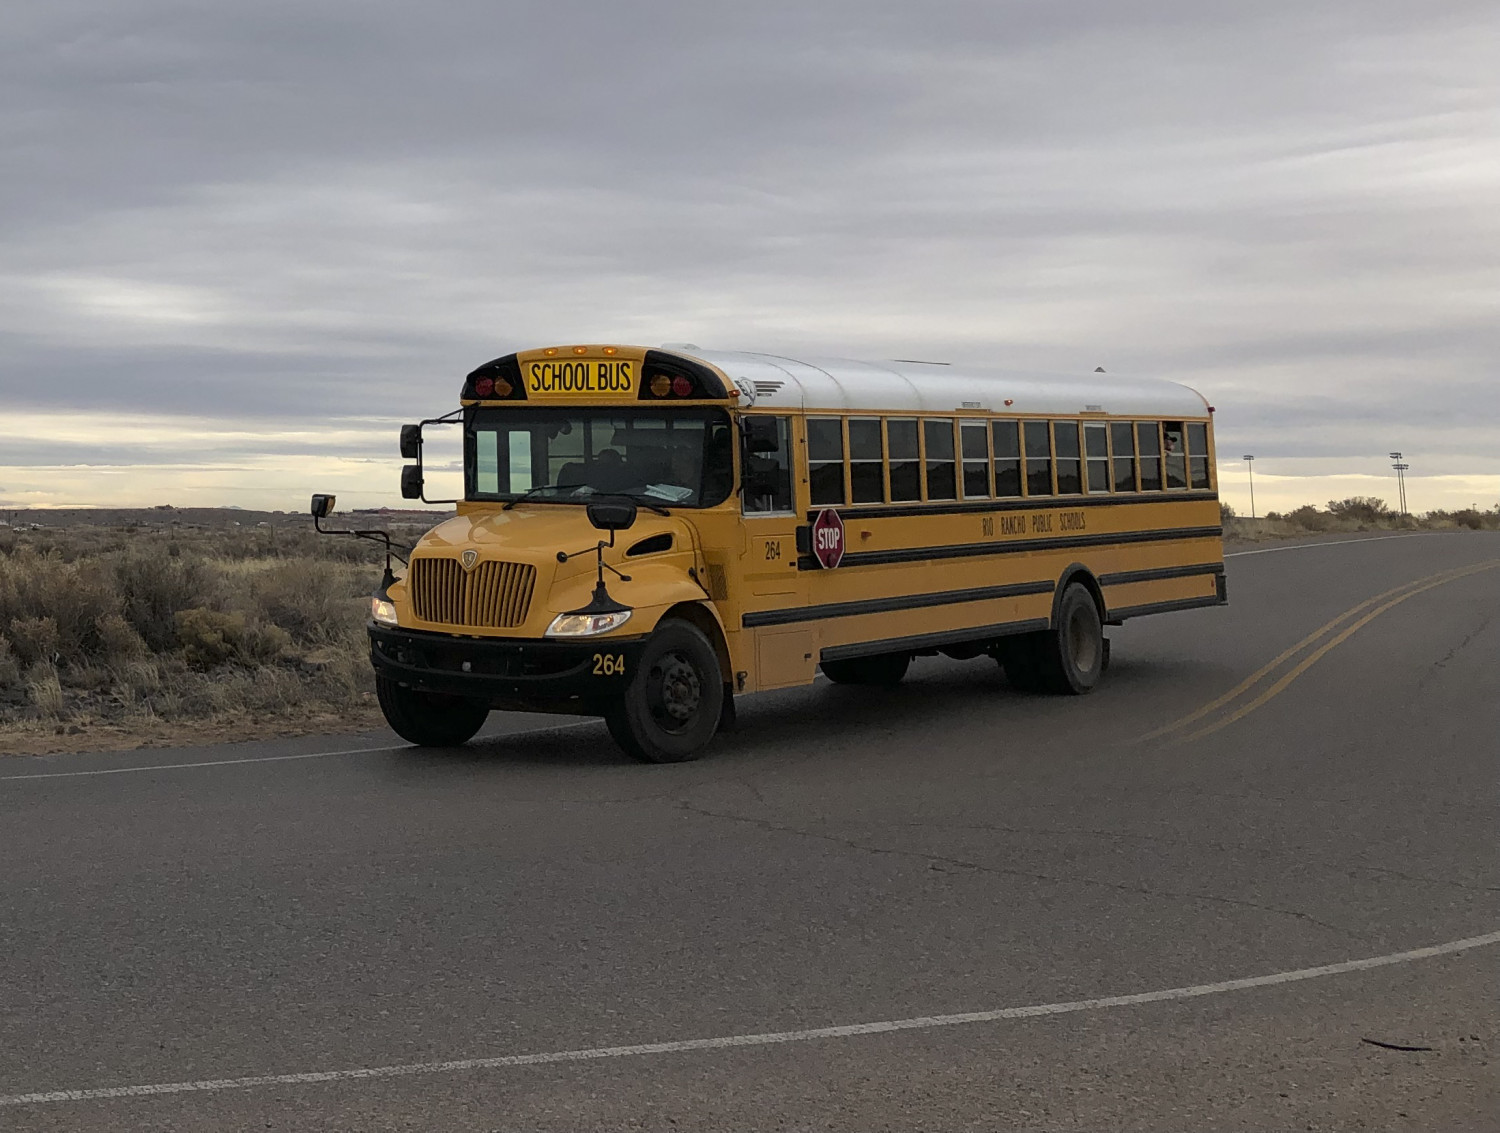 17 Children Need Treatment After Bus Overturns on Kansas Turnpike